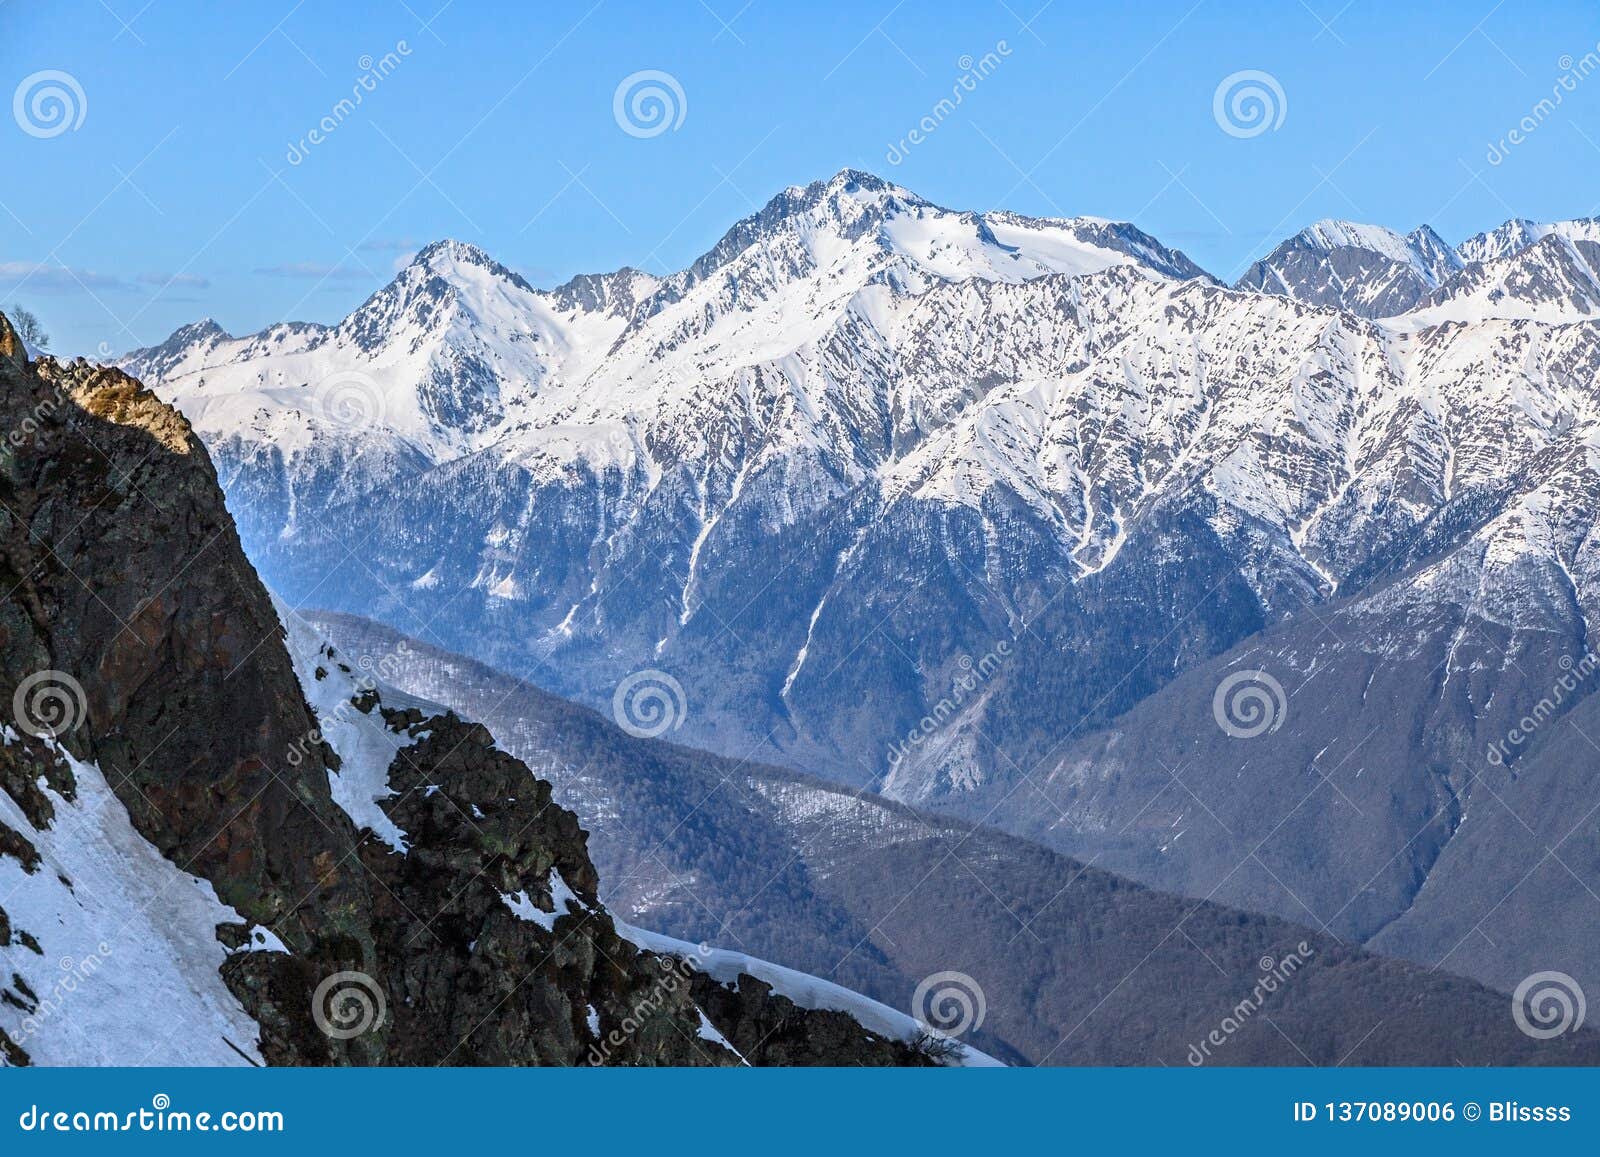 Beautiful Mountain Scenic Winter Landscape Of Main Caucasus Mountains